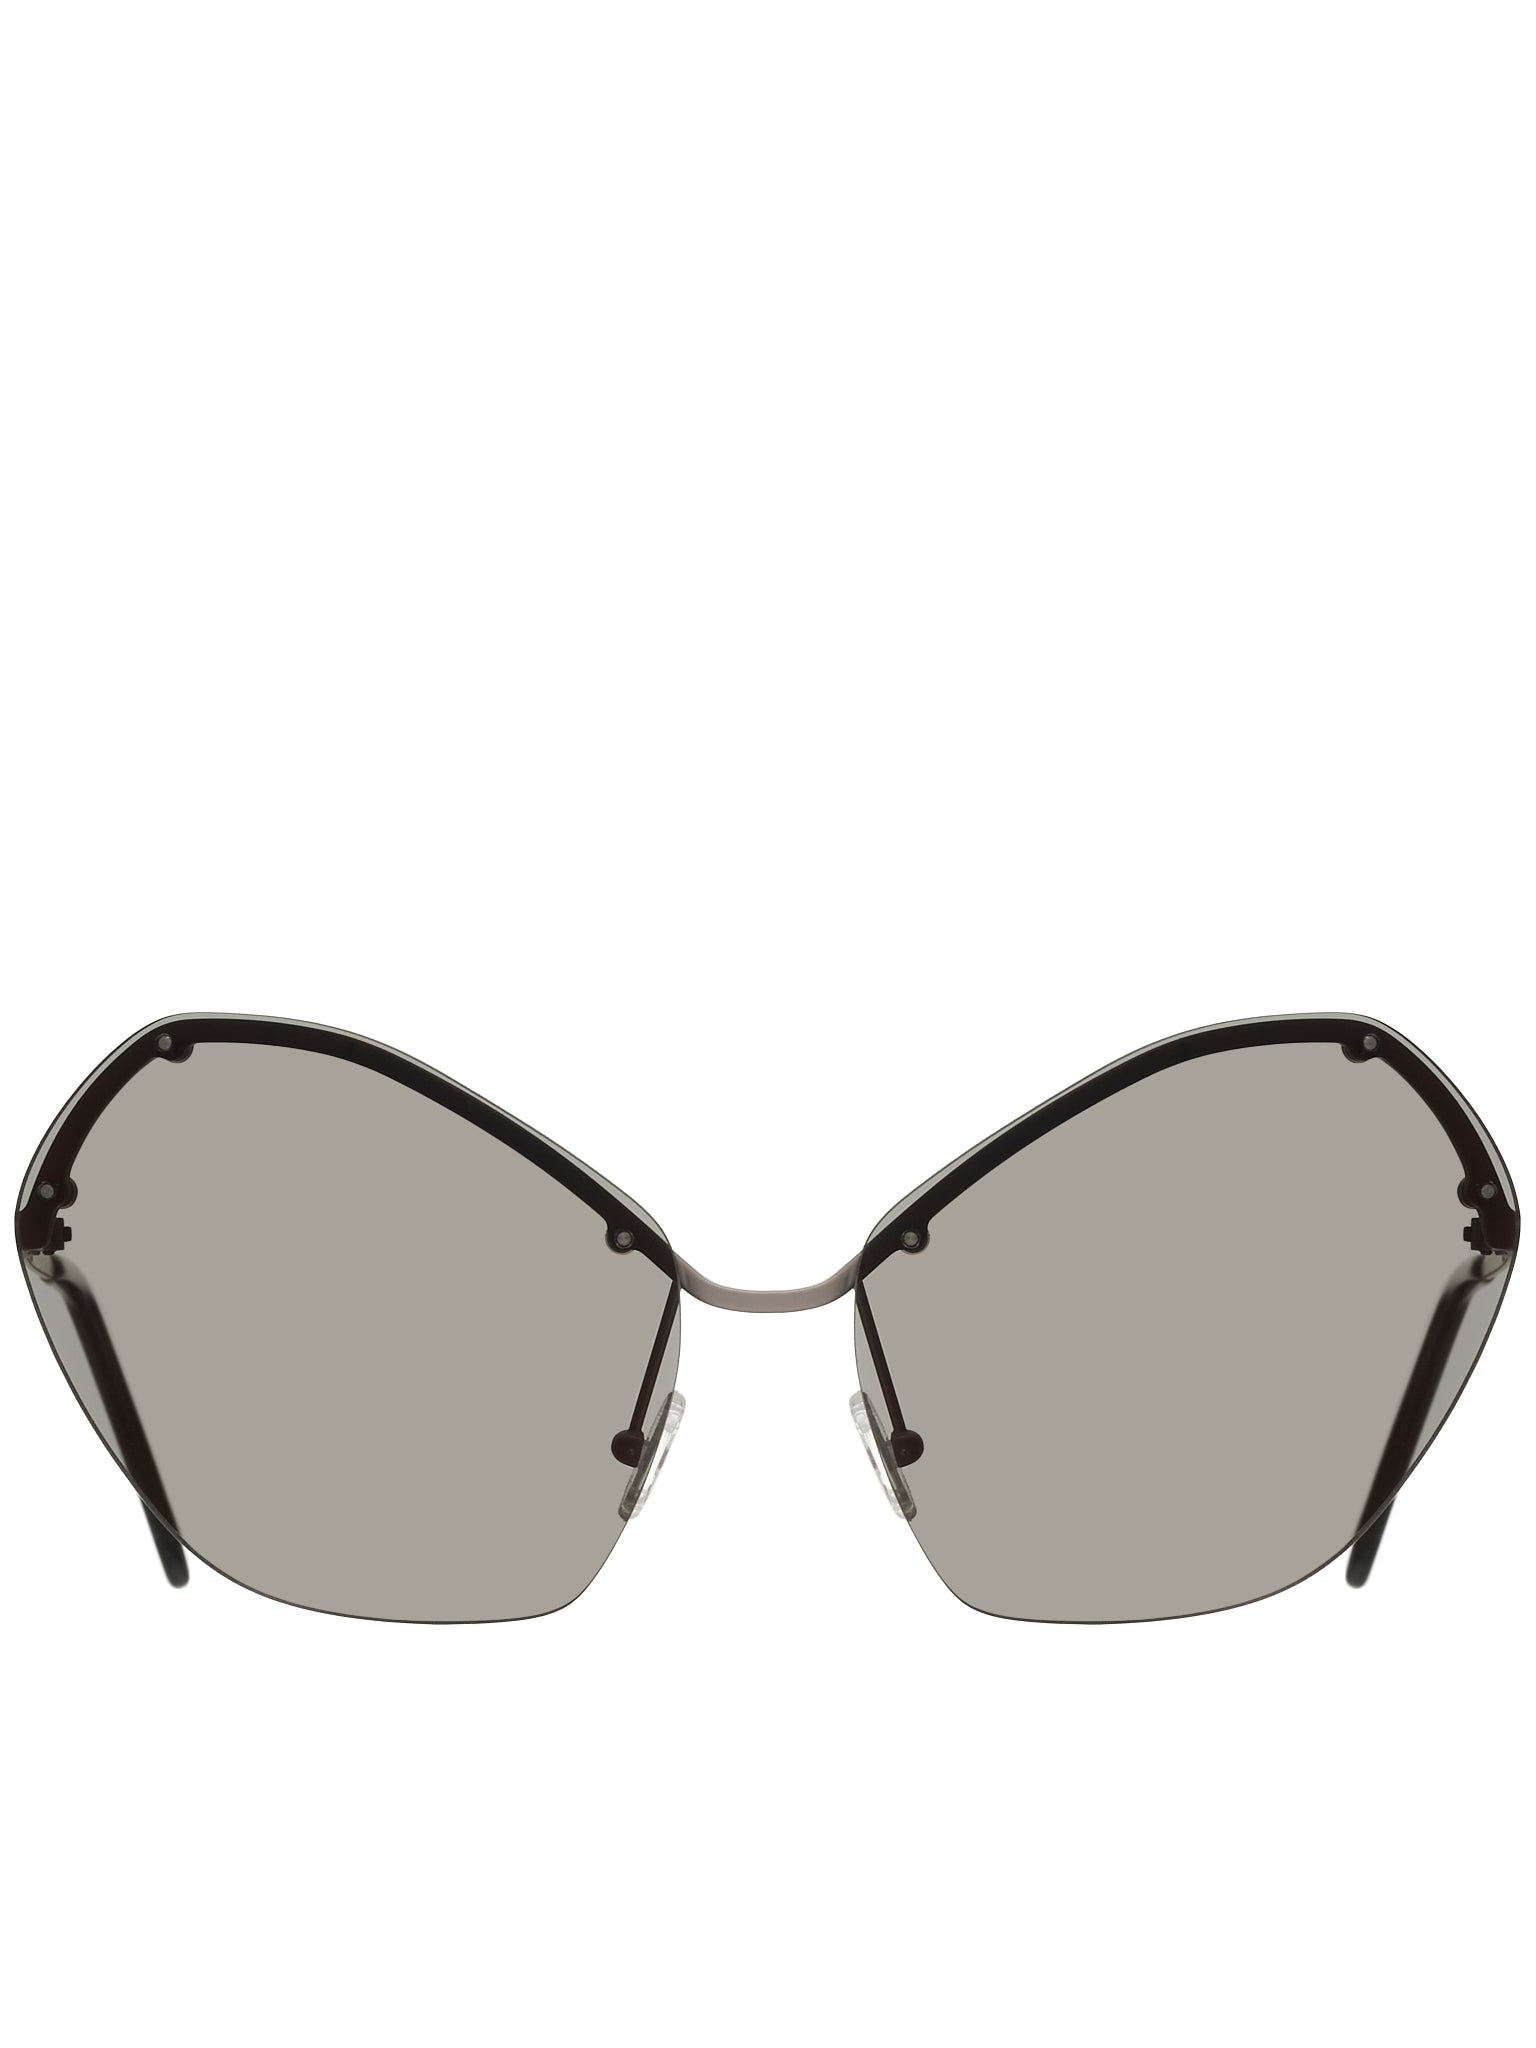 KNWLS Burgundy Sunglasses | H.Lorenzo - front